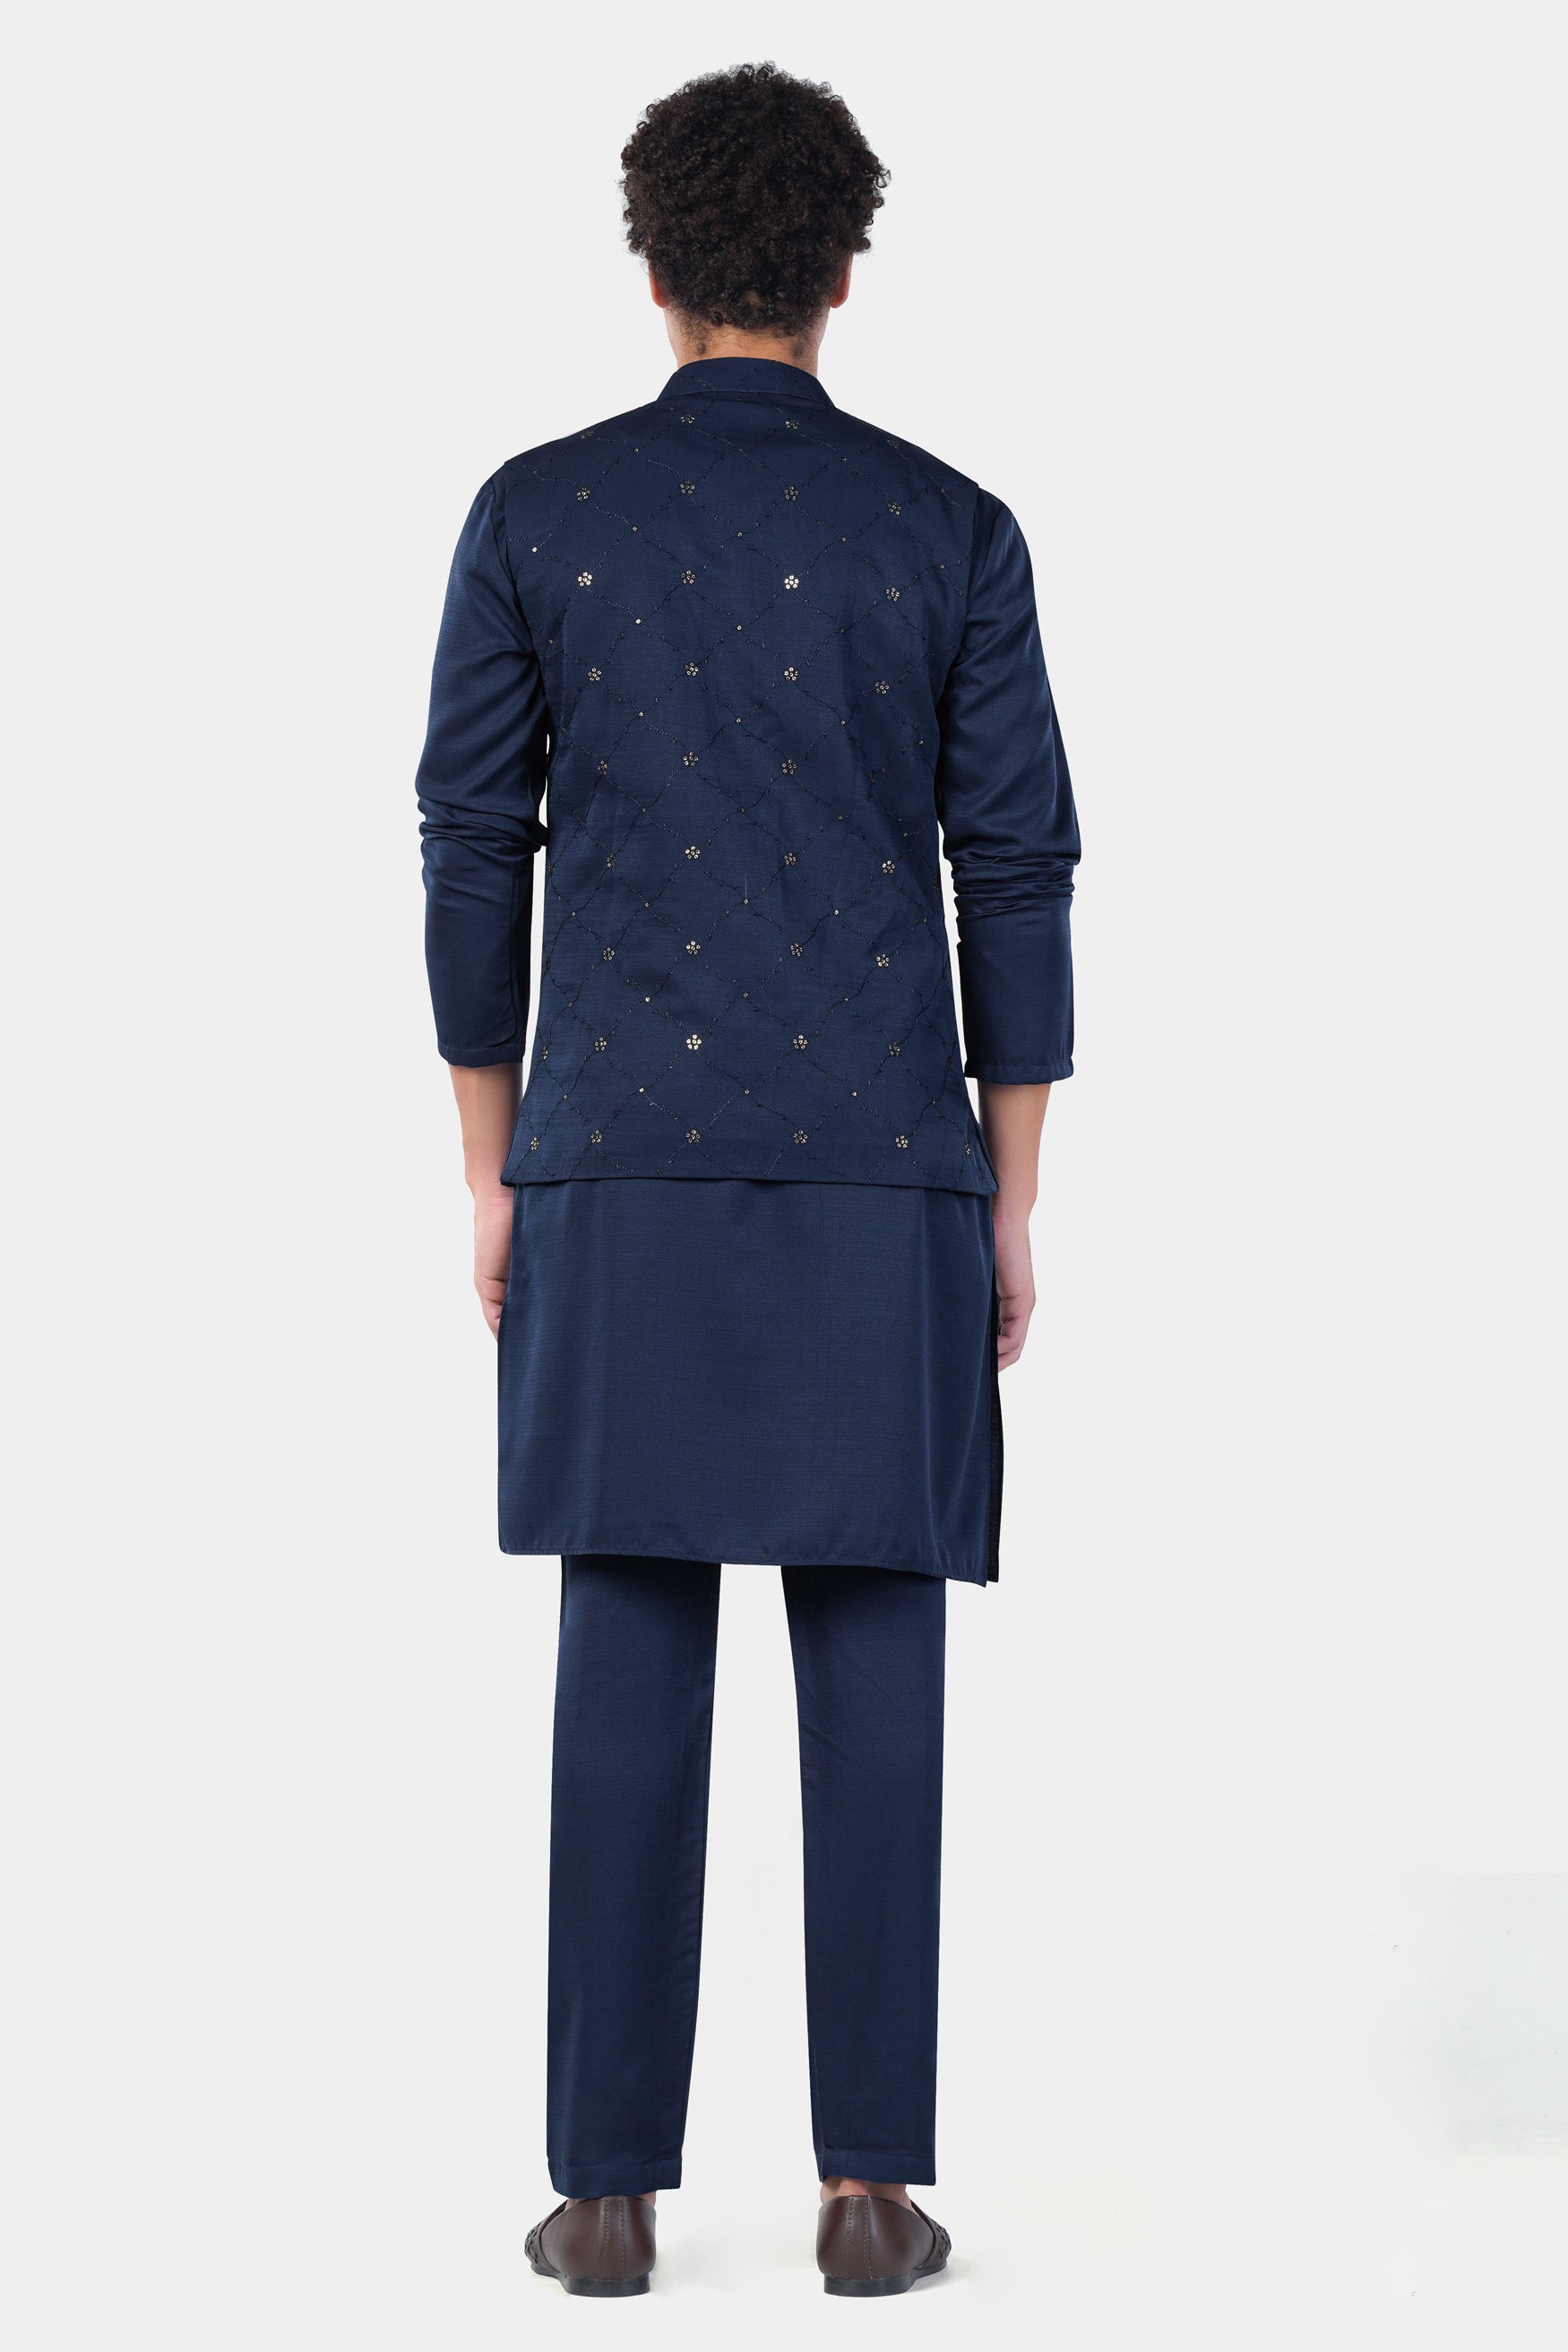 Buy Designer Kurta Pajama Sherwani Self Design Jacket Special Occasion  Men's Outfit Koti Style Long Coat Wedding Gifts for Him Online in India -  Etsy